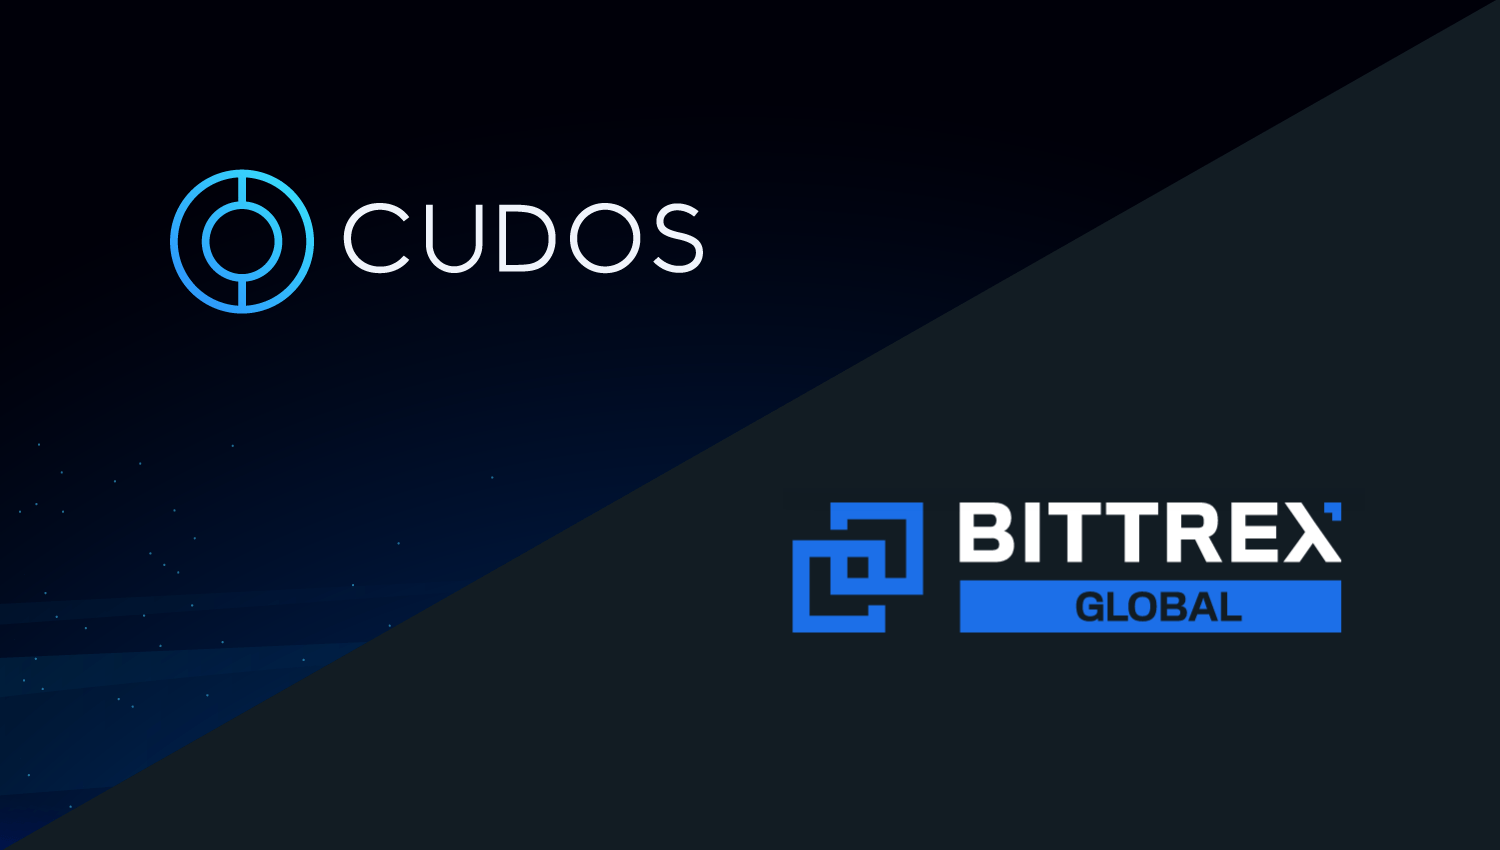 CUDOS is listing on Bittrex Global!